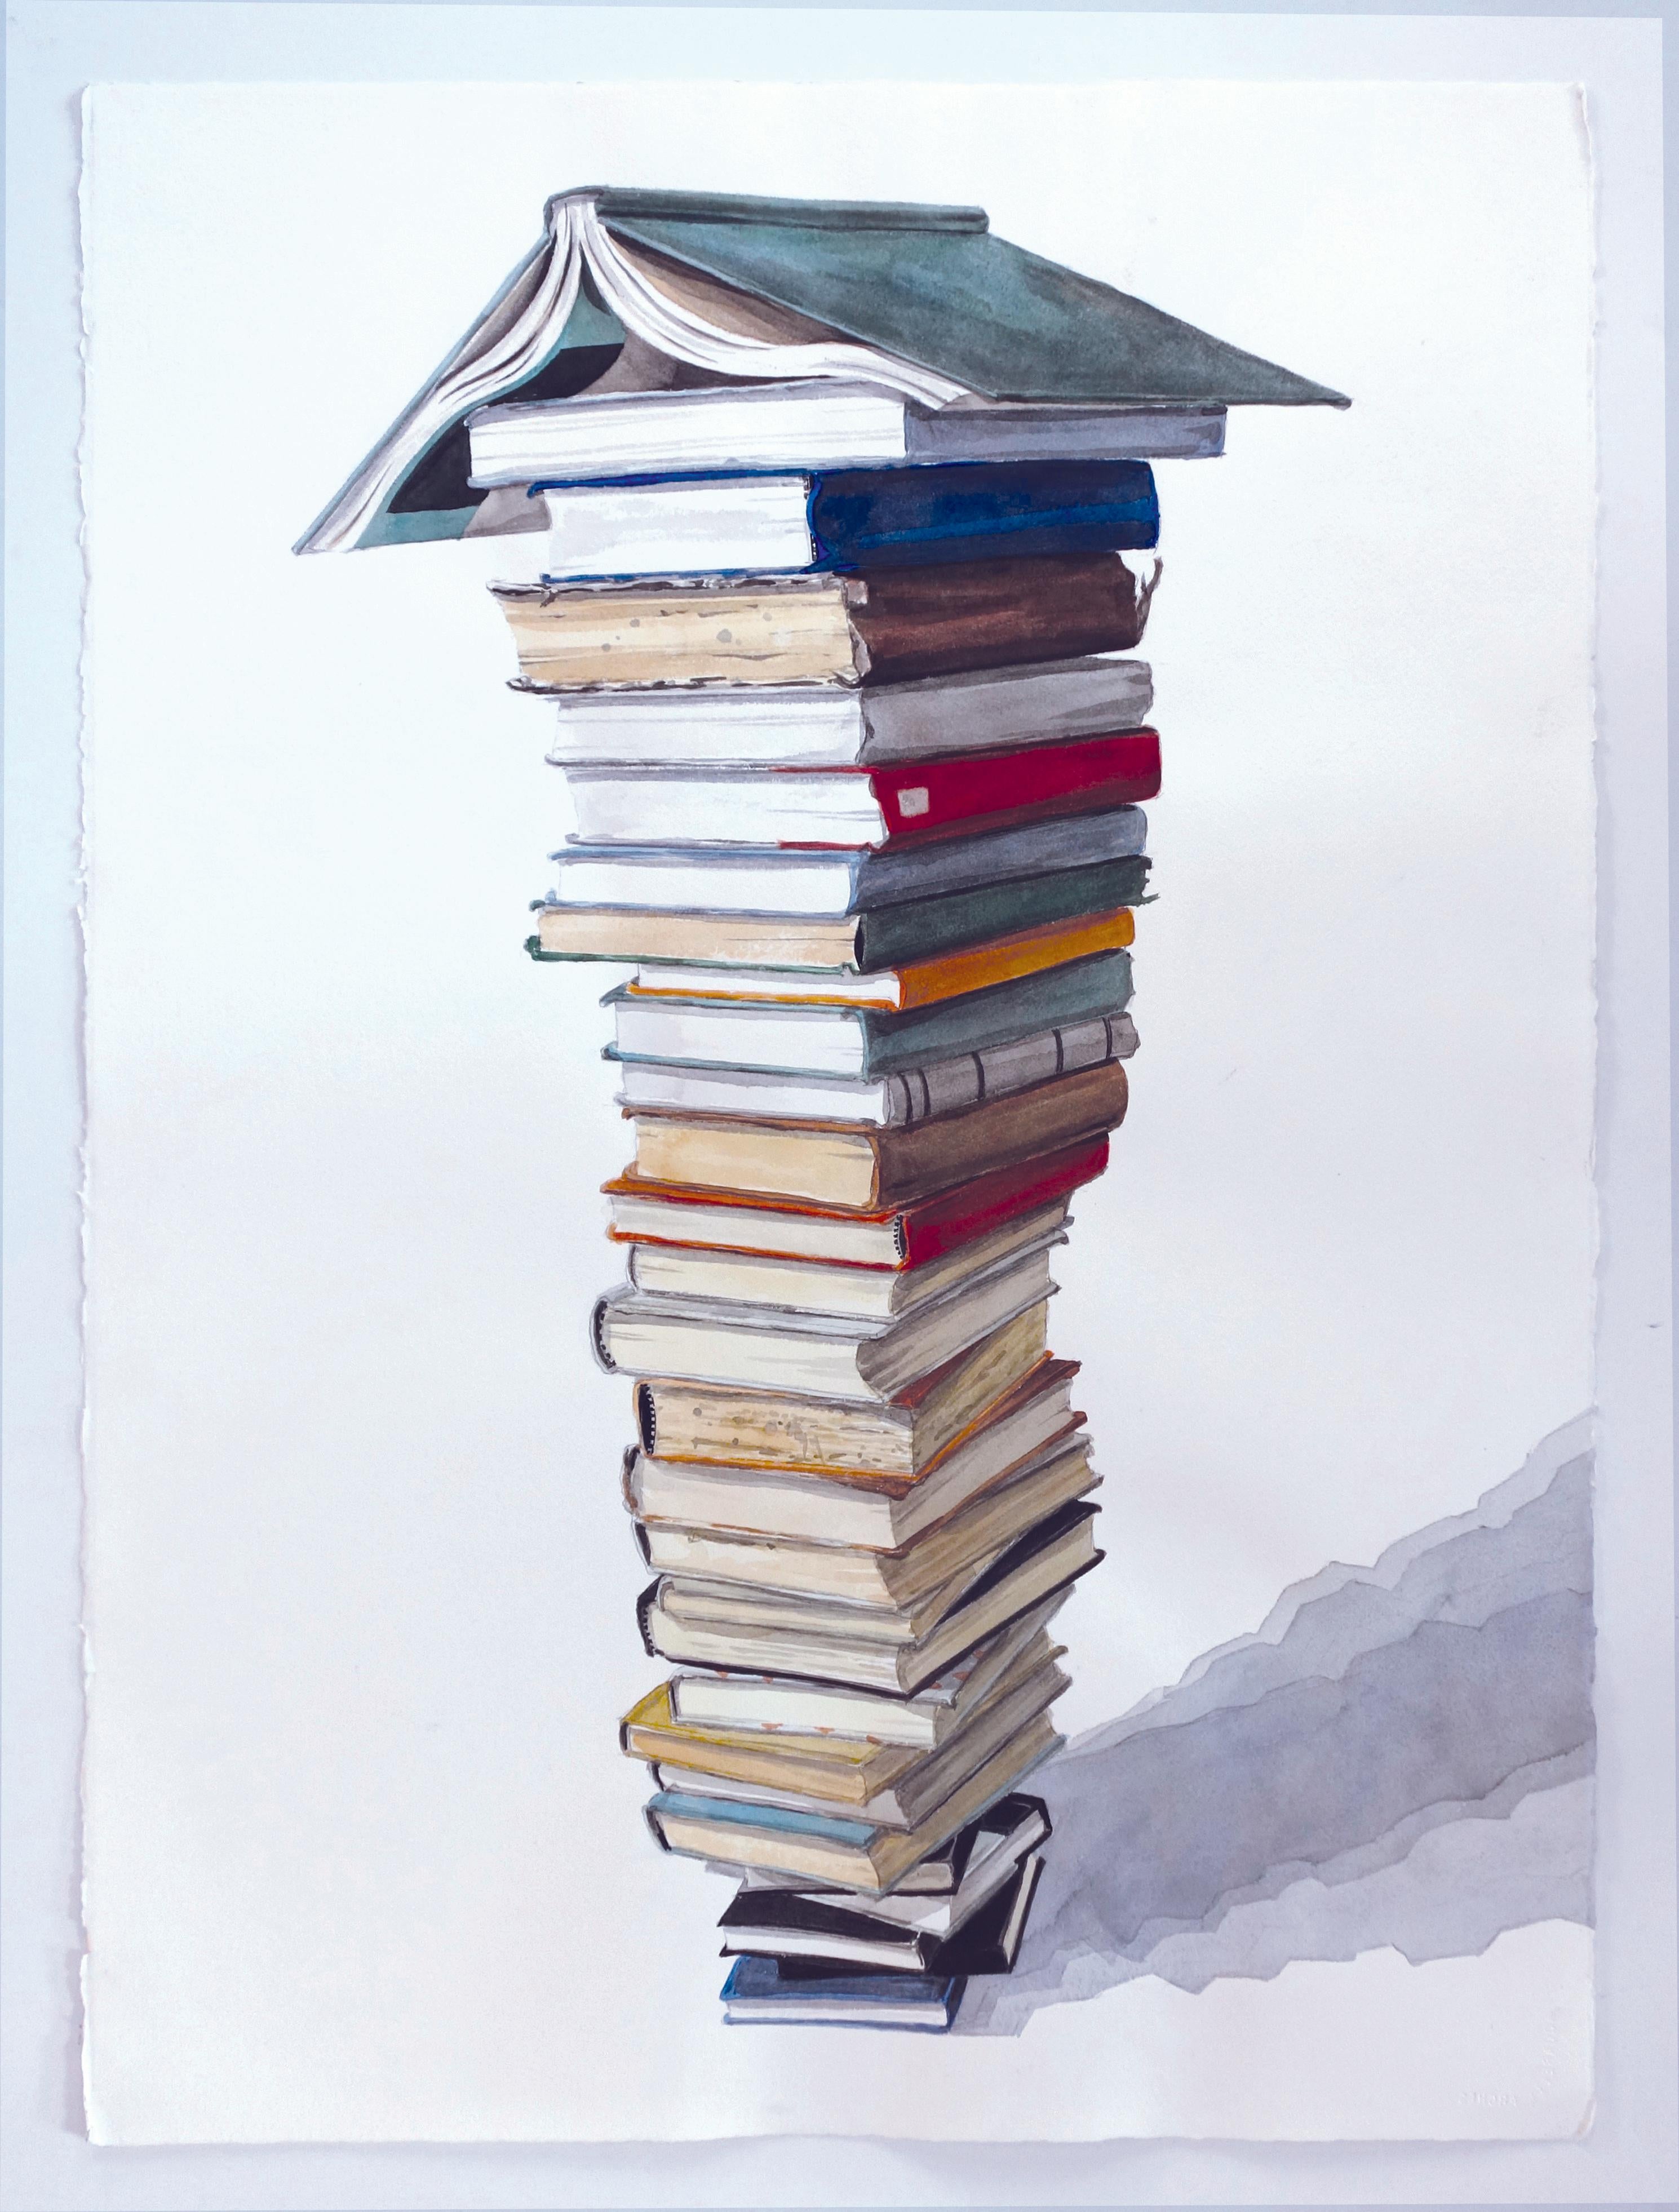 Thomas Broadbent Still-Life - "Tall Stack" Contemporary Surrealist Still Life Painting of Books